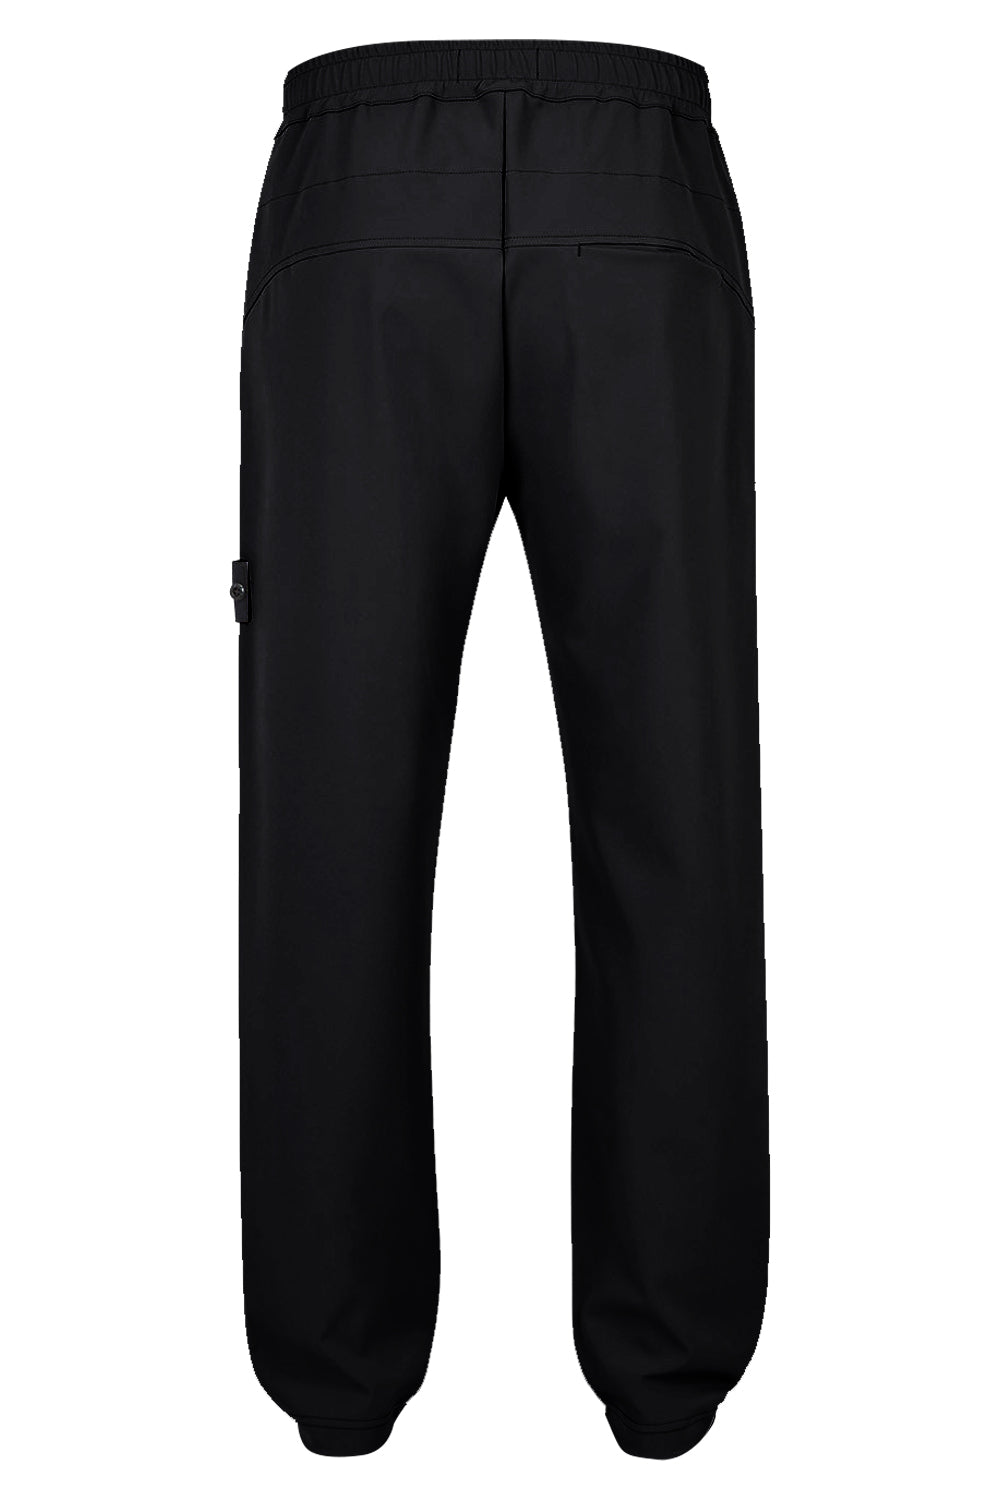 STONE ISLAND - Pantalon Coupe droite noir